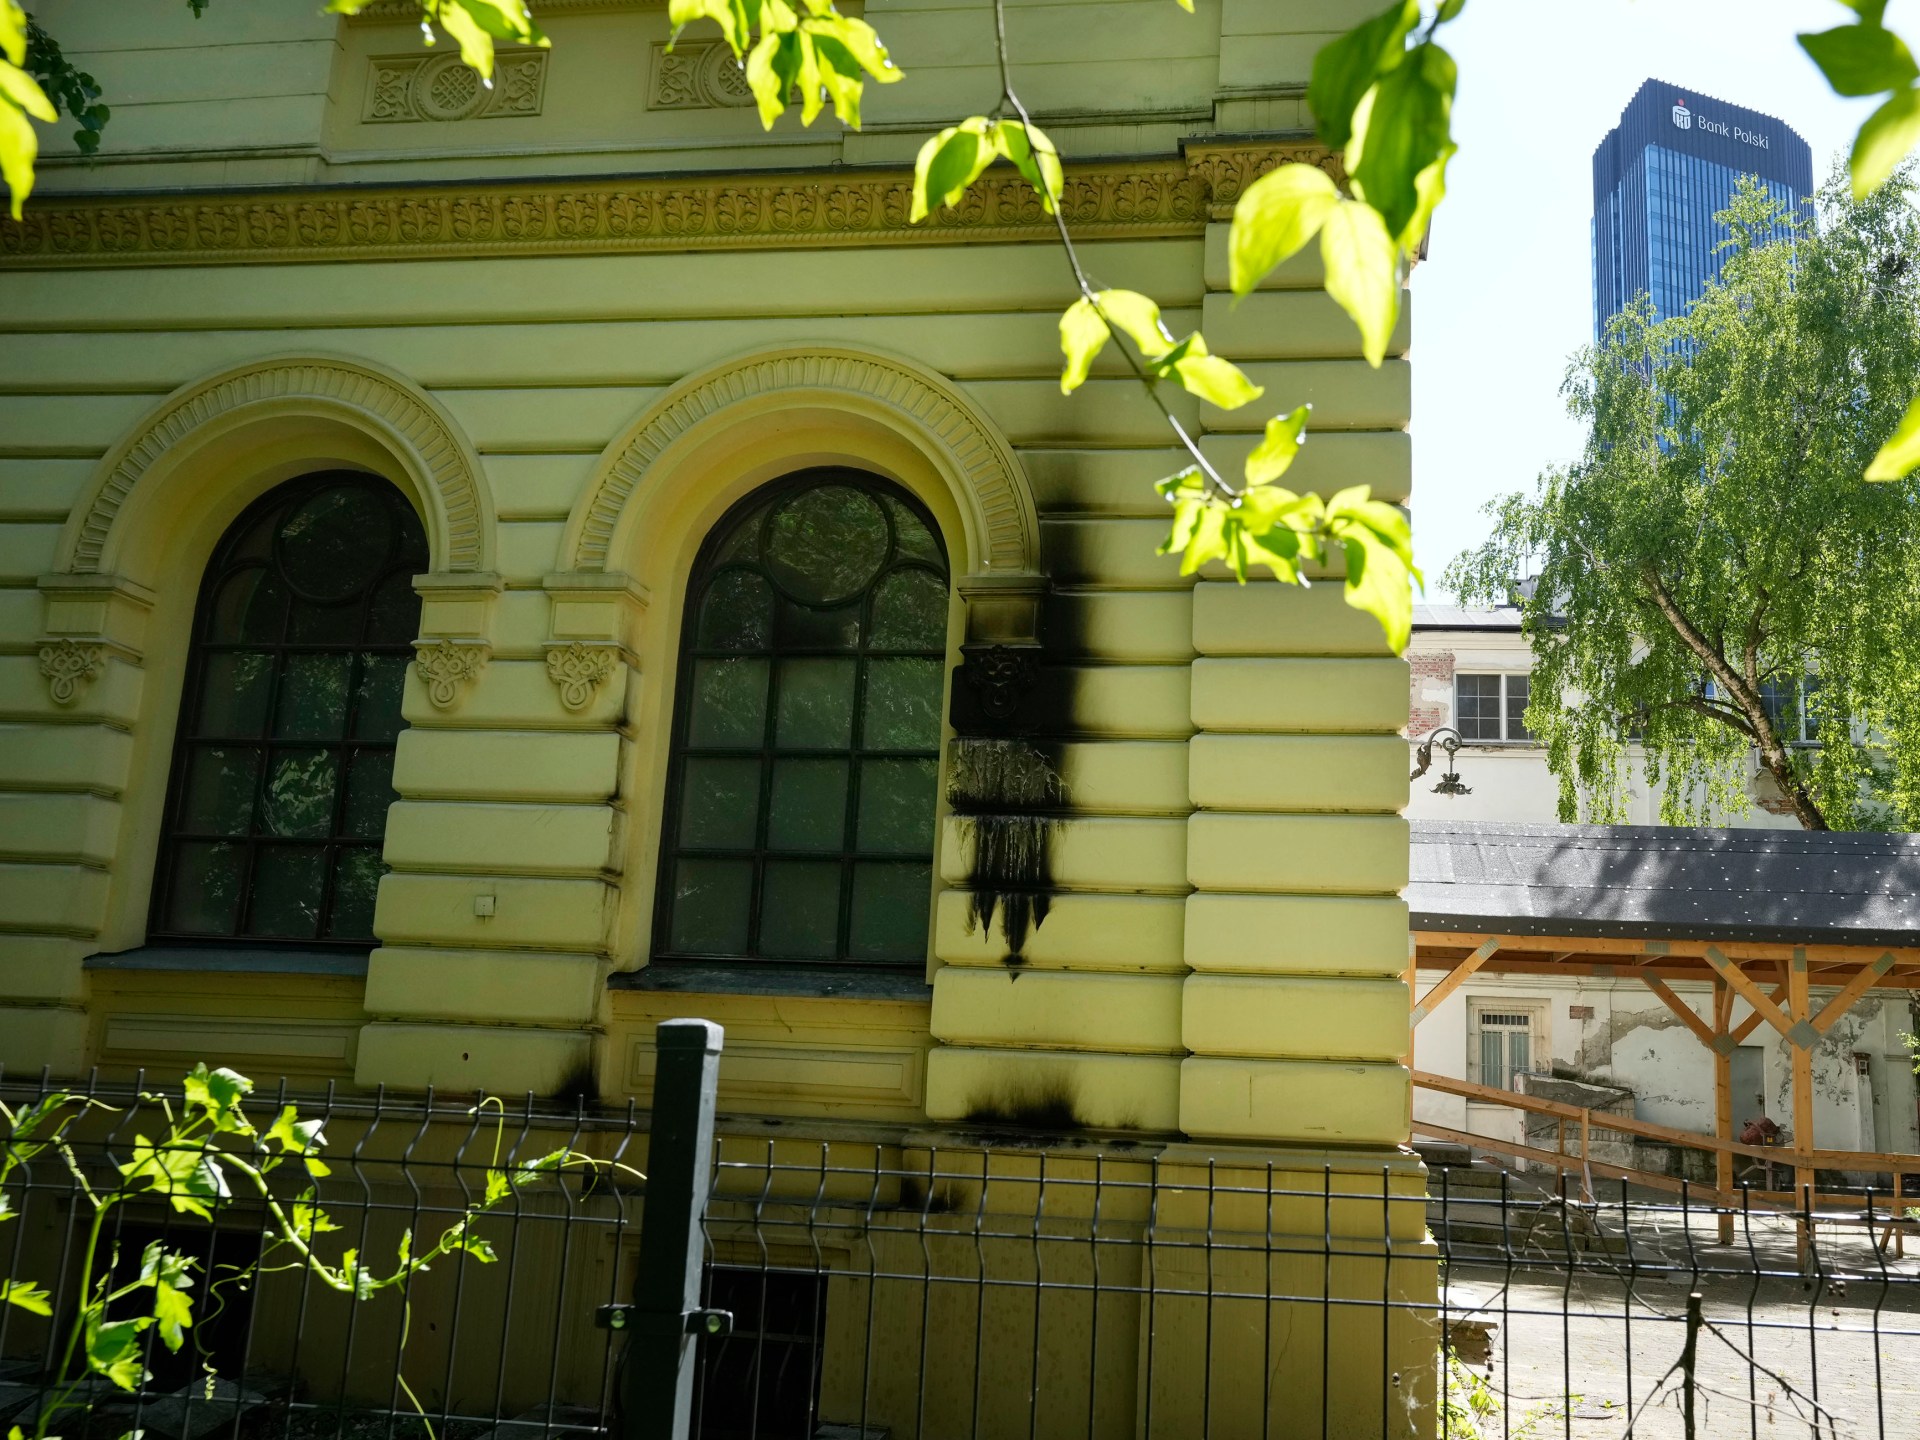 Polish politicians condemn Warsaw synagogue firebombing | European Union News